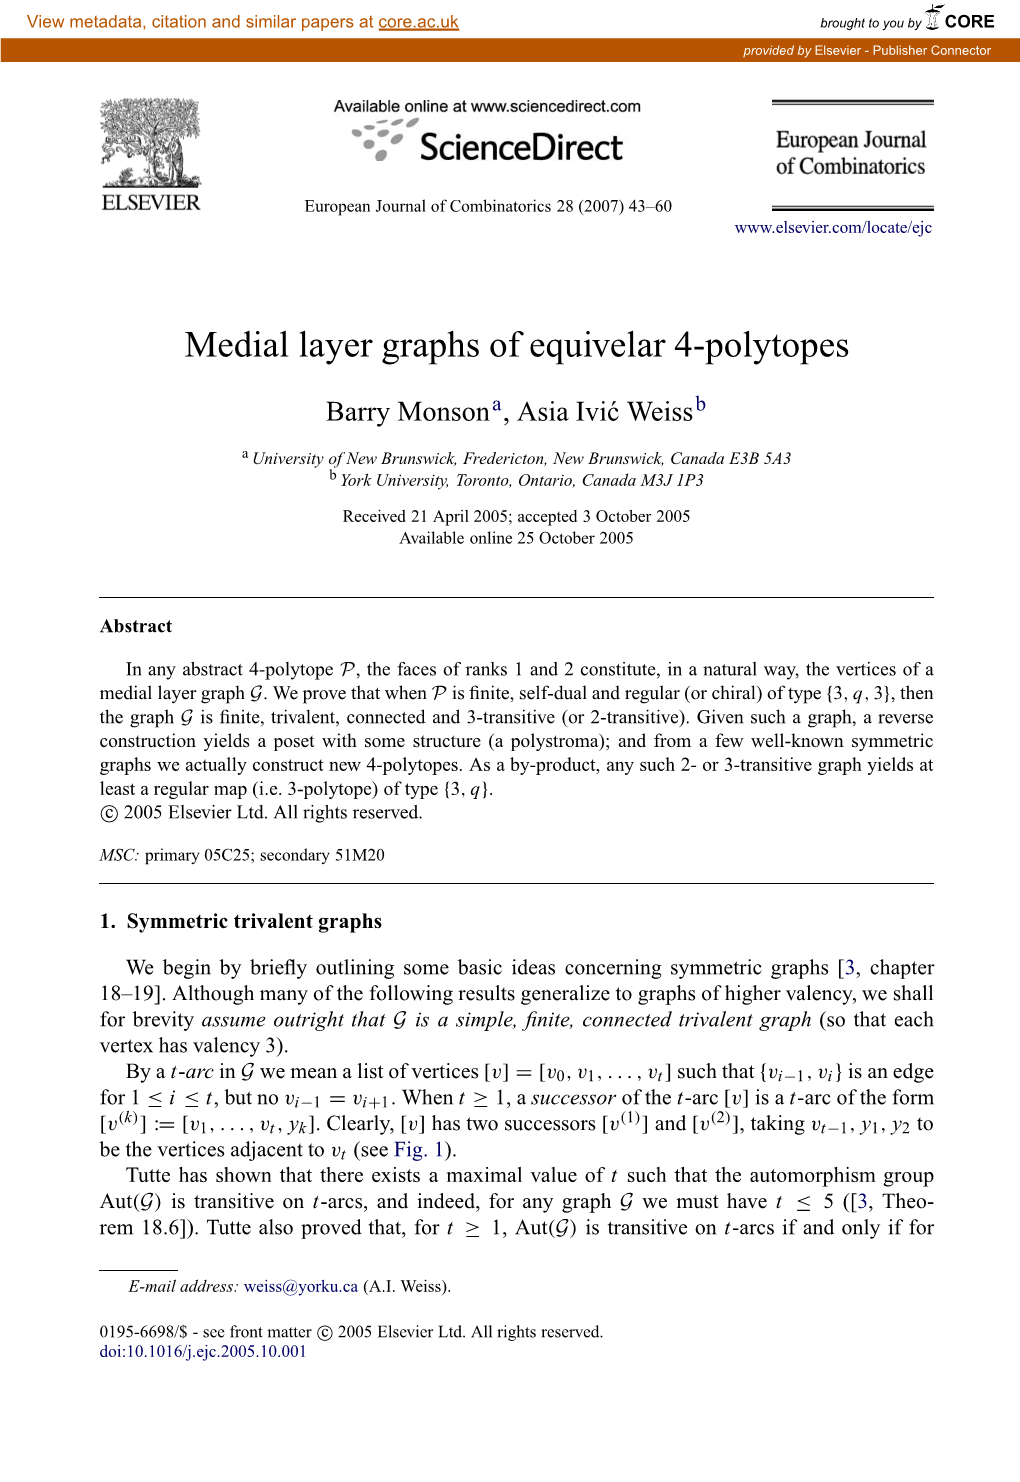 Medial Layer Graphs of Equivelar 4-Polytopes